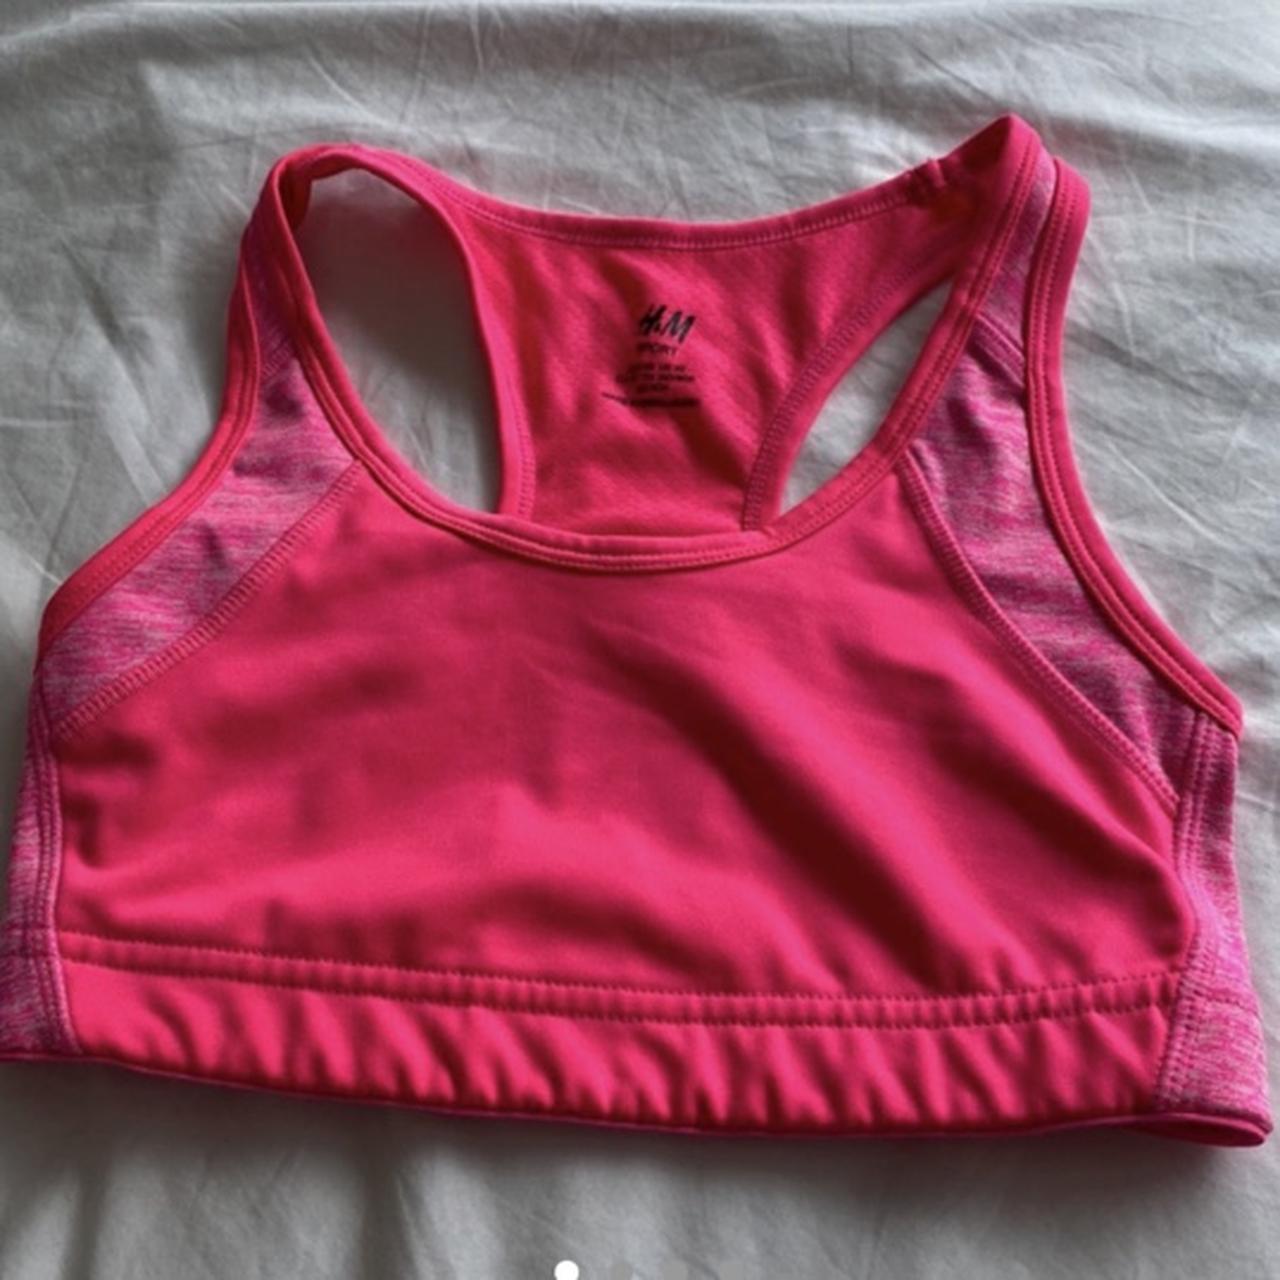 H&M SPORT padded neon pink sports bra 💓 EU size XS, - Depop